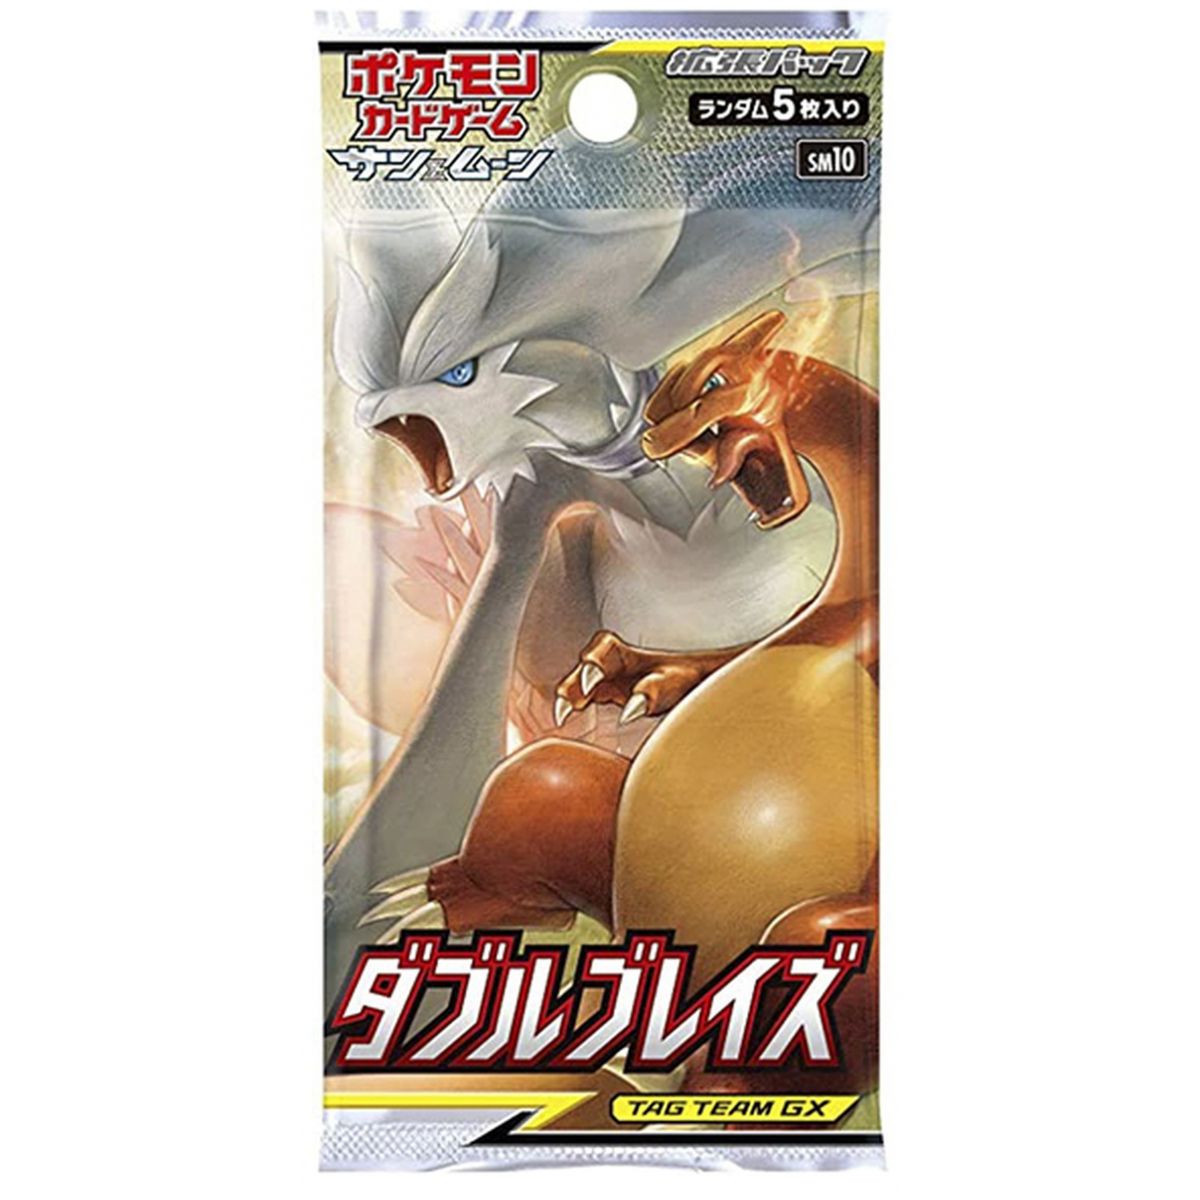 Pokémon - Boosters - Double Blaze [SM10] - JP